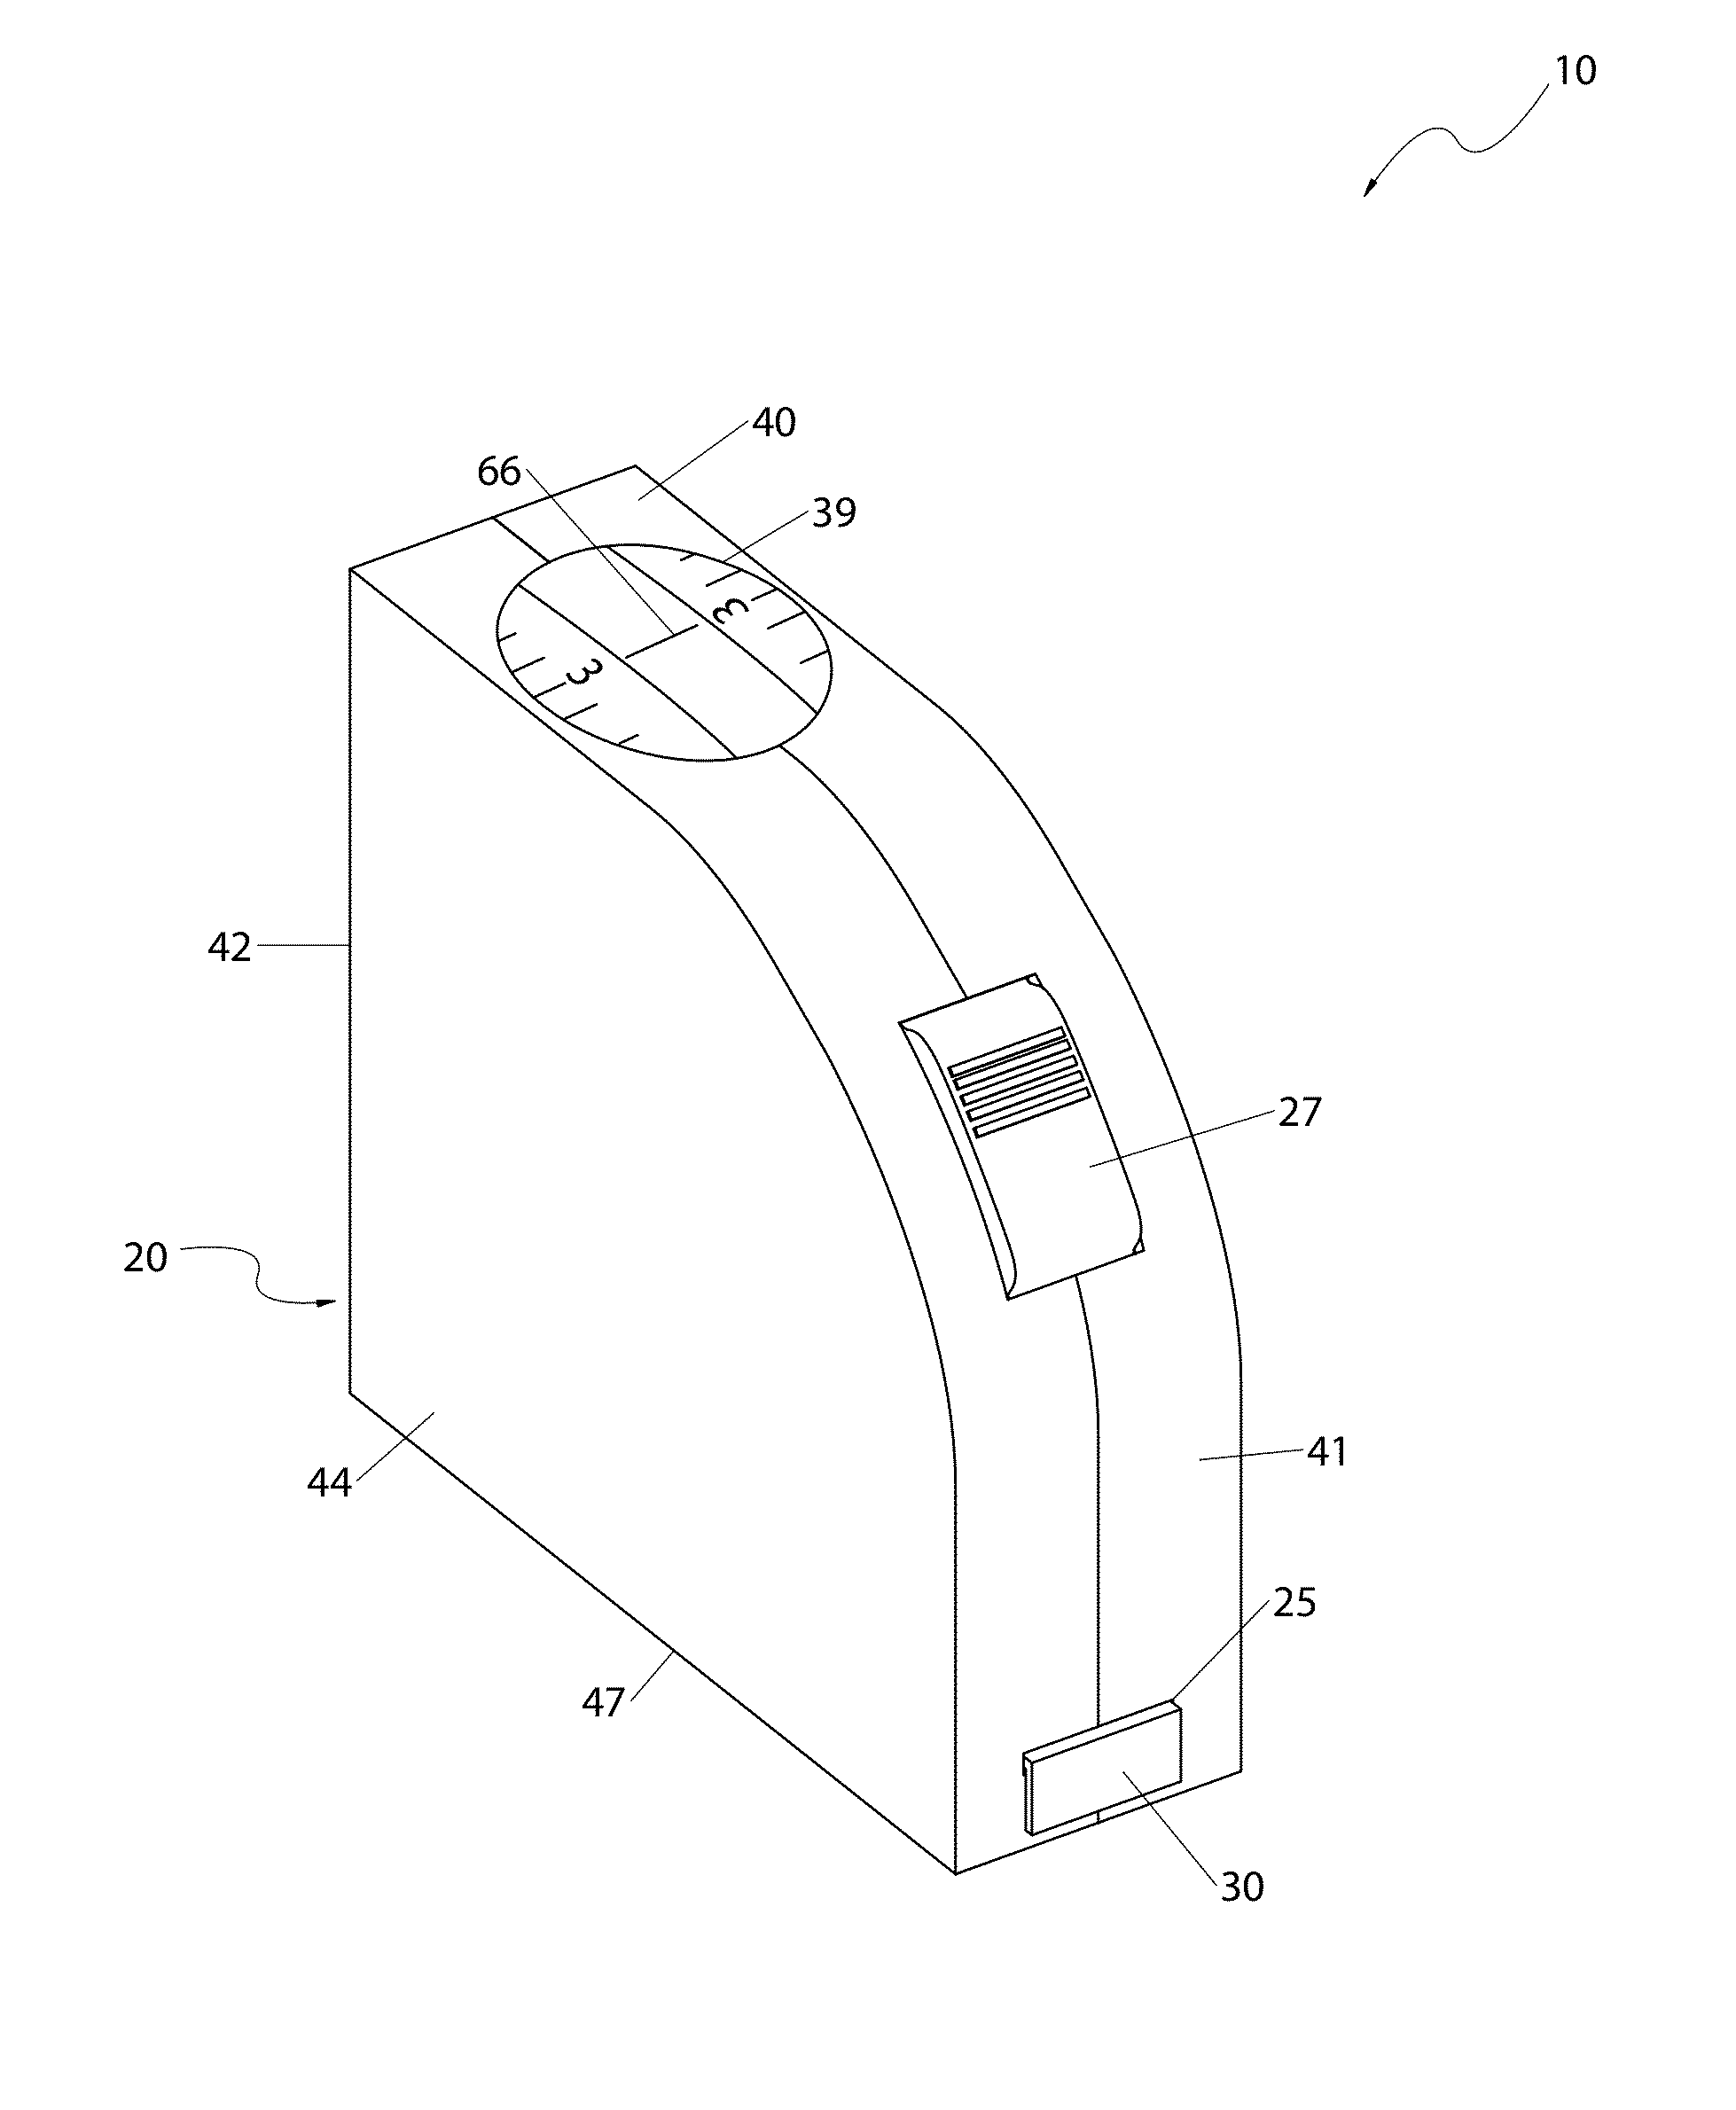 Multi-functional measuring tape